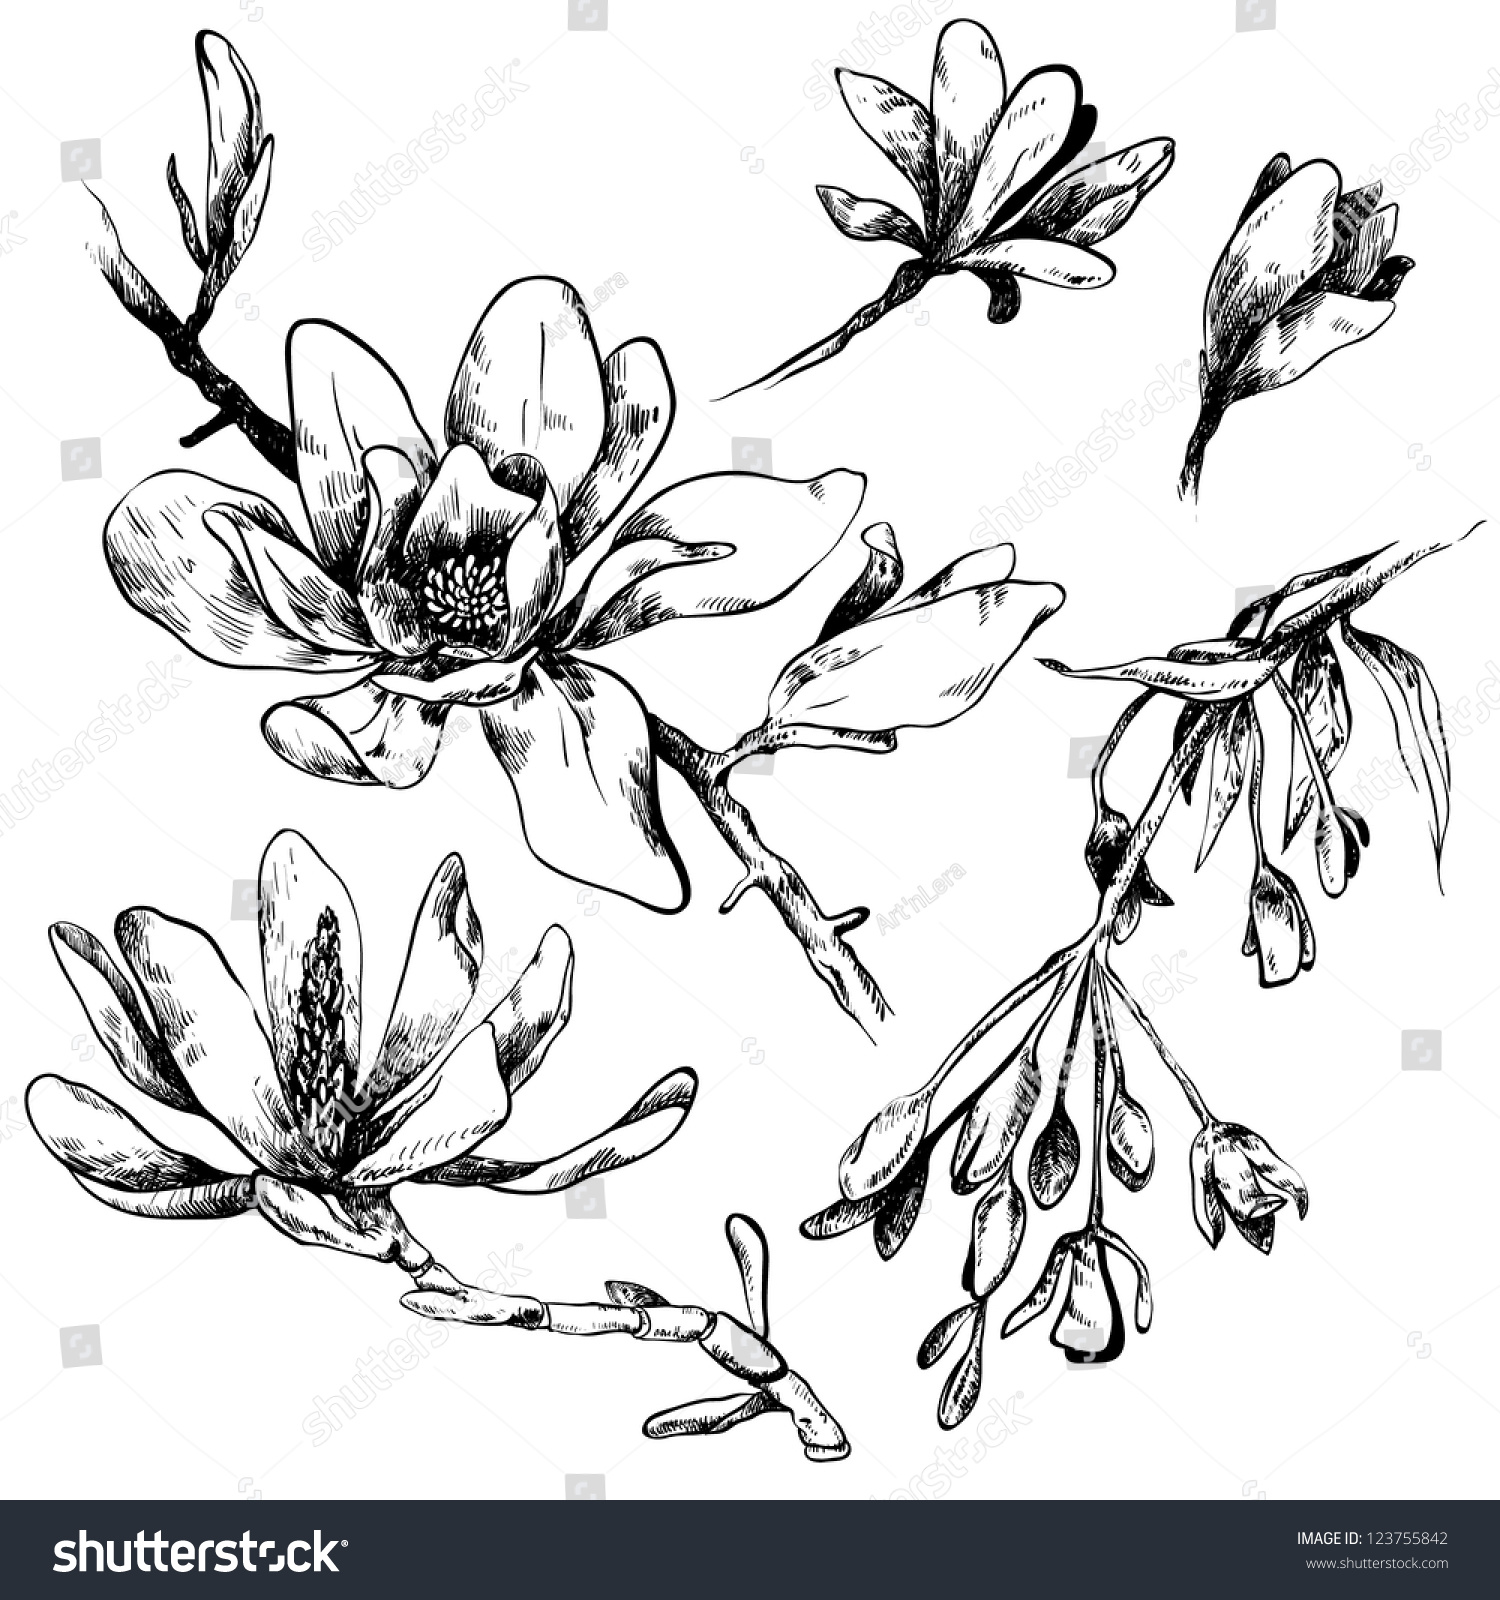 Black And White Illustration Of Magnolia Flowers - 123755842 : Shutterstock